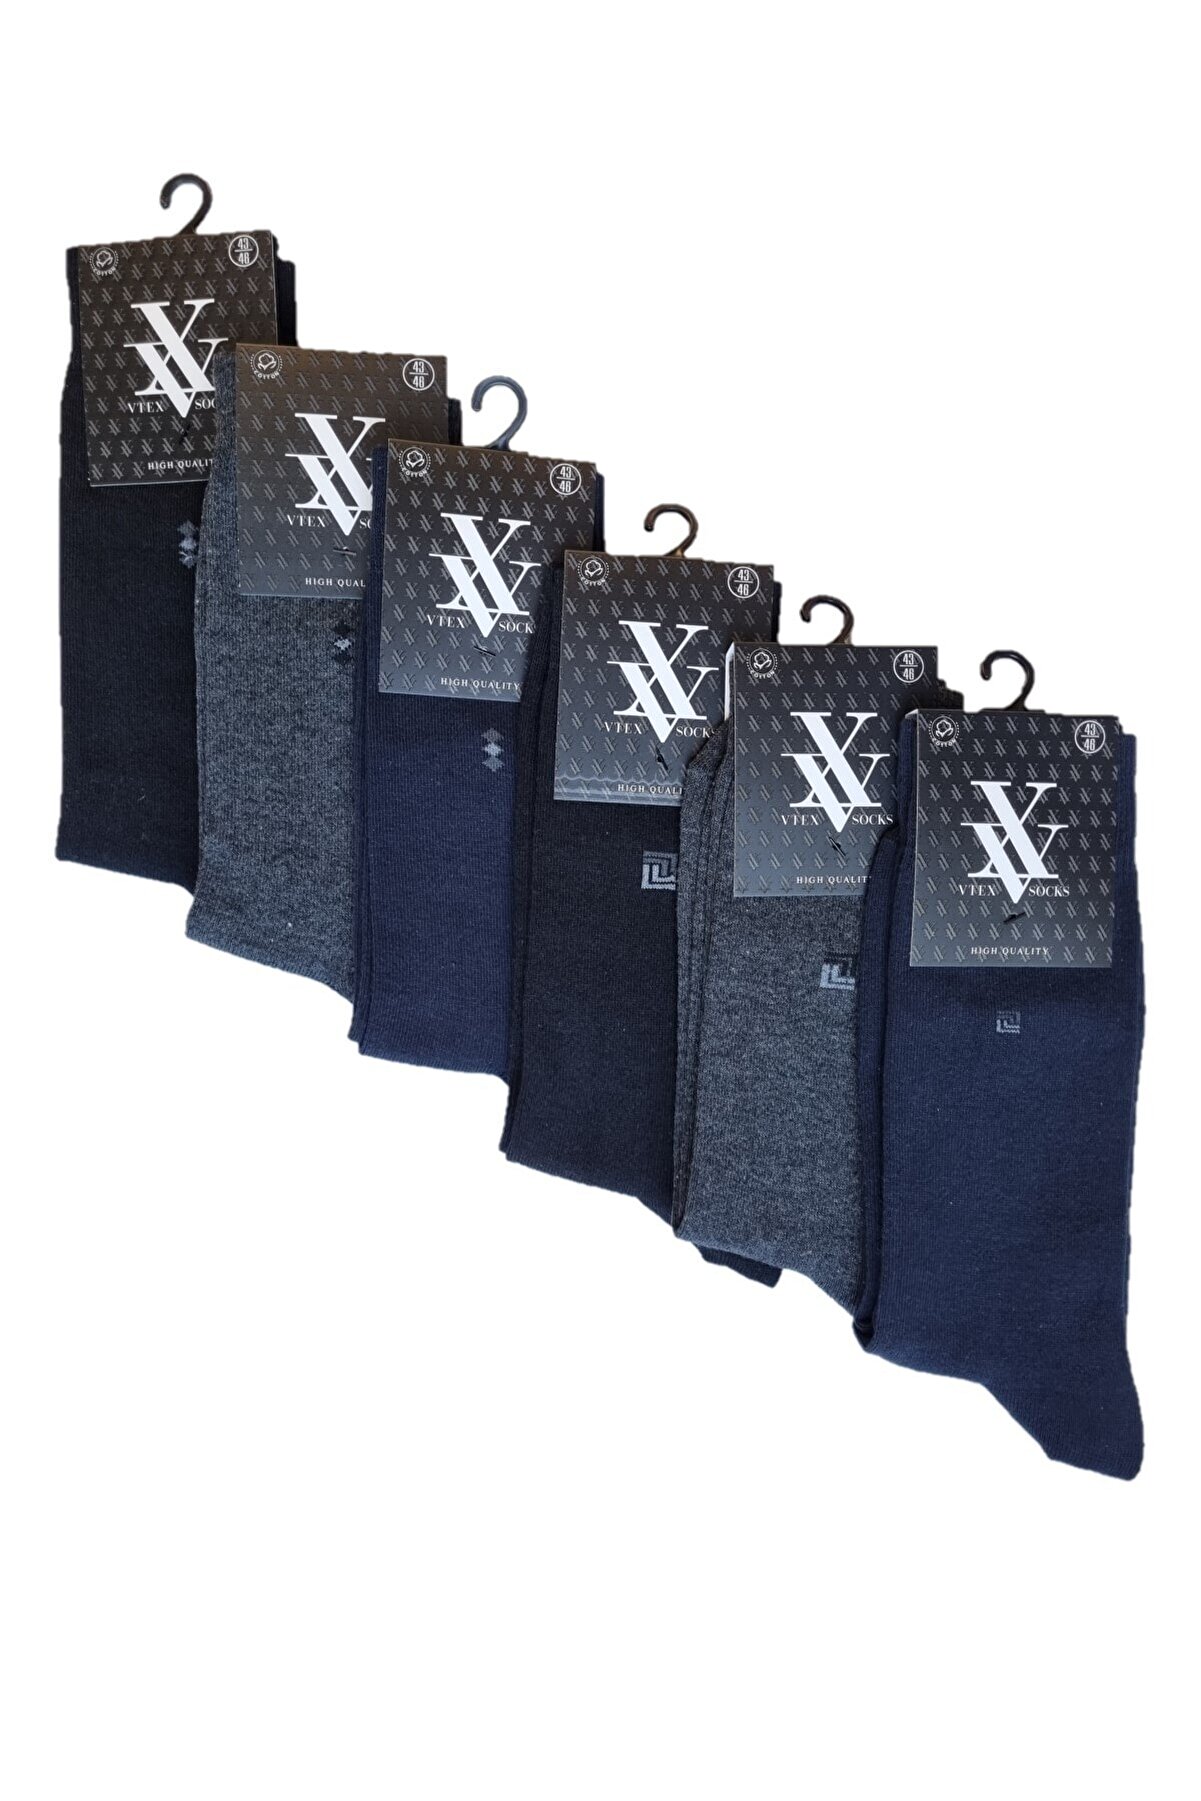 vtex socks 6'lı Erkek Çorap Yüksek Pamuklu Siyah Laci Füme 6 Çift